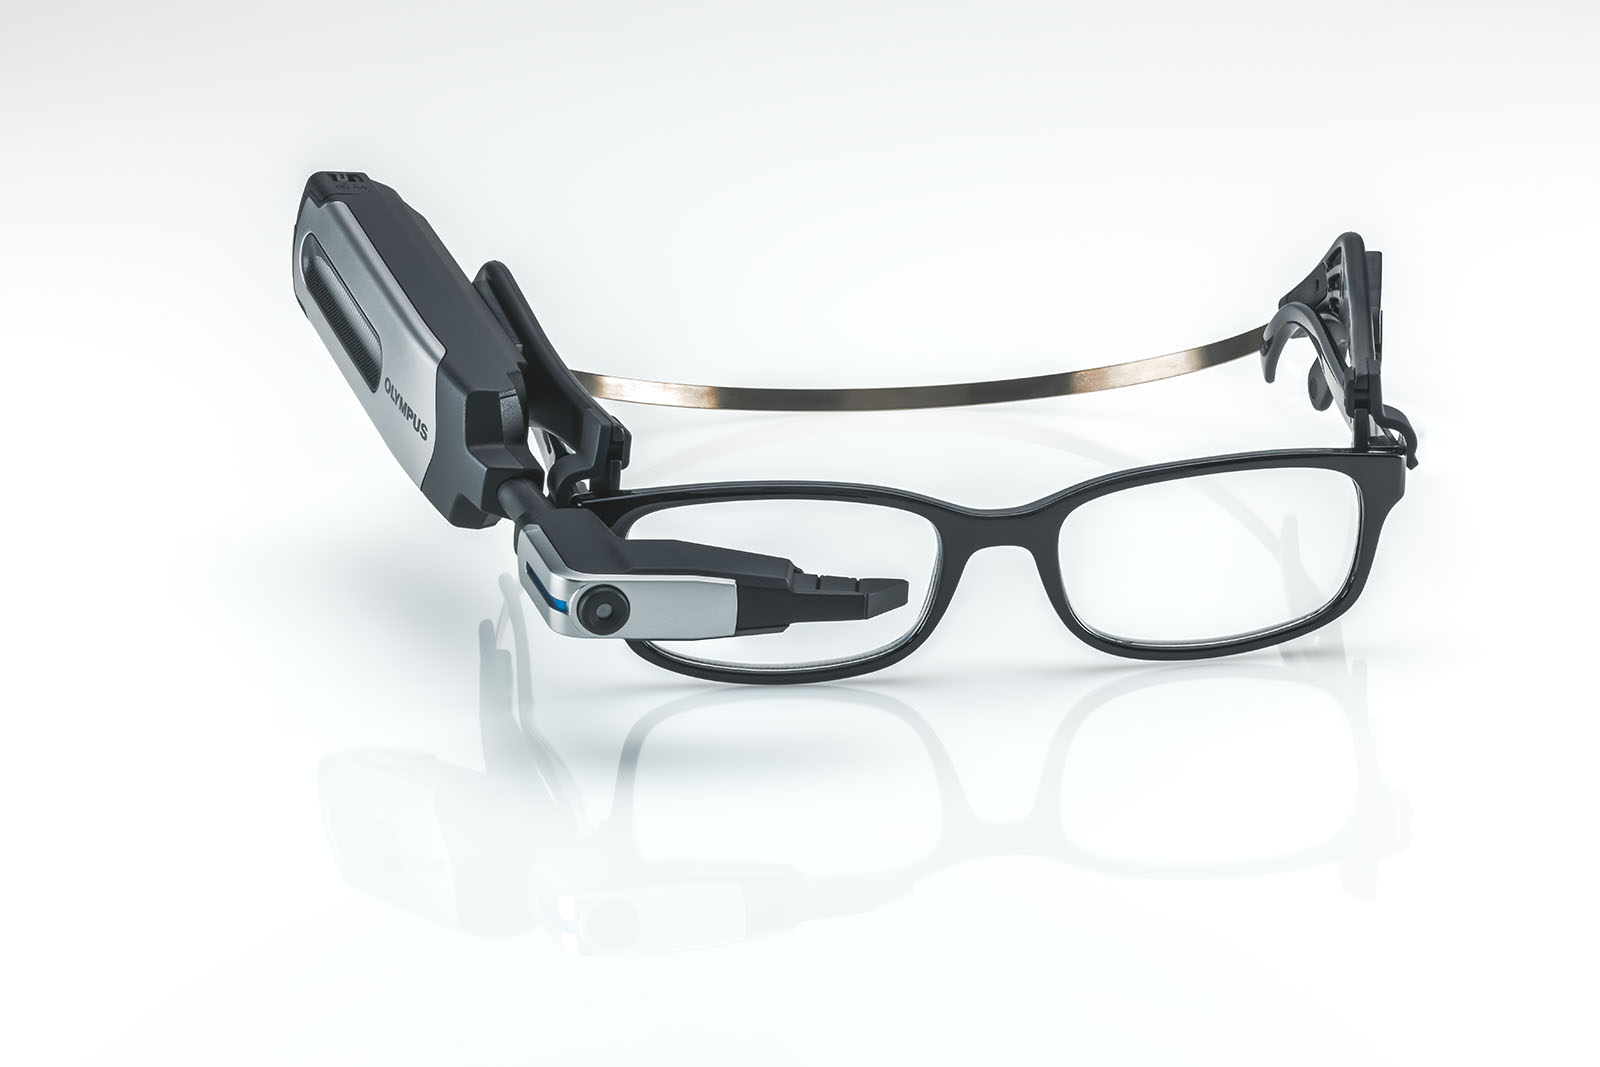 olympus smart glasses el 10 announced eyetrek insight ei 170920 098 s